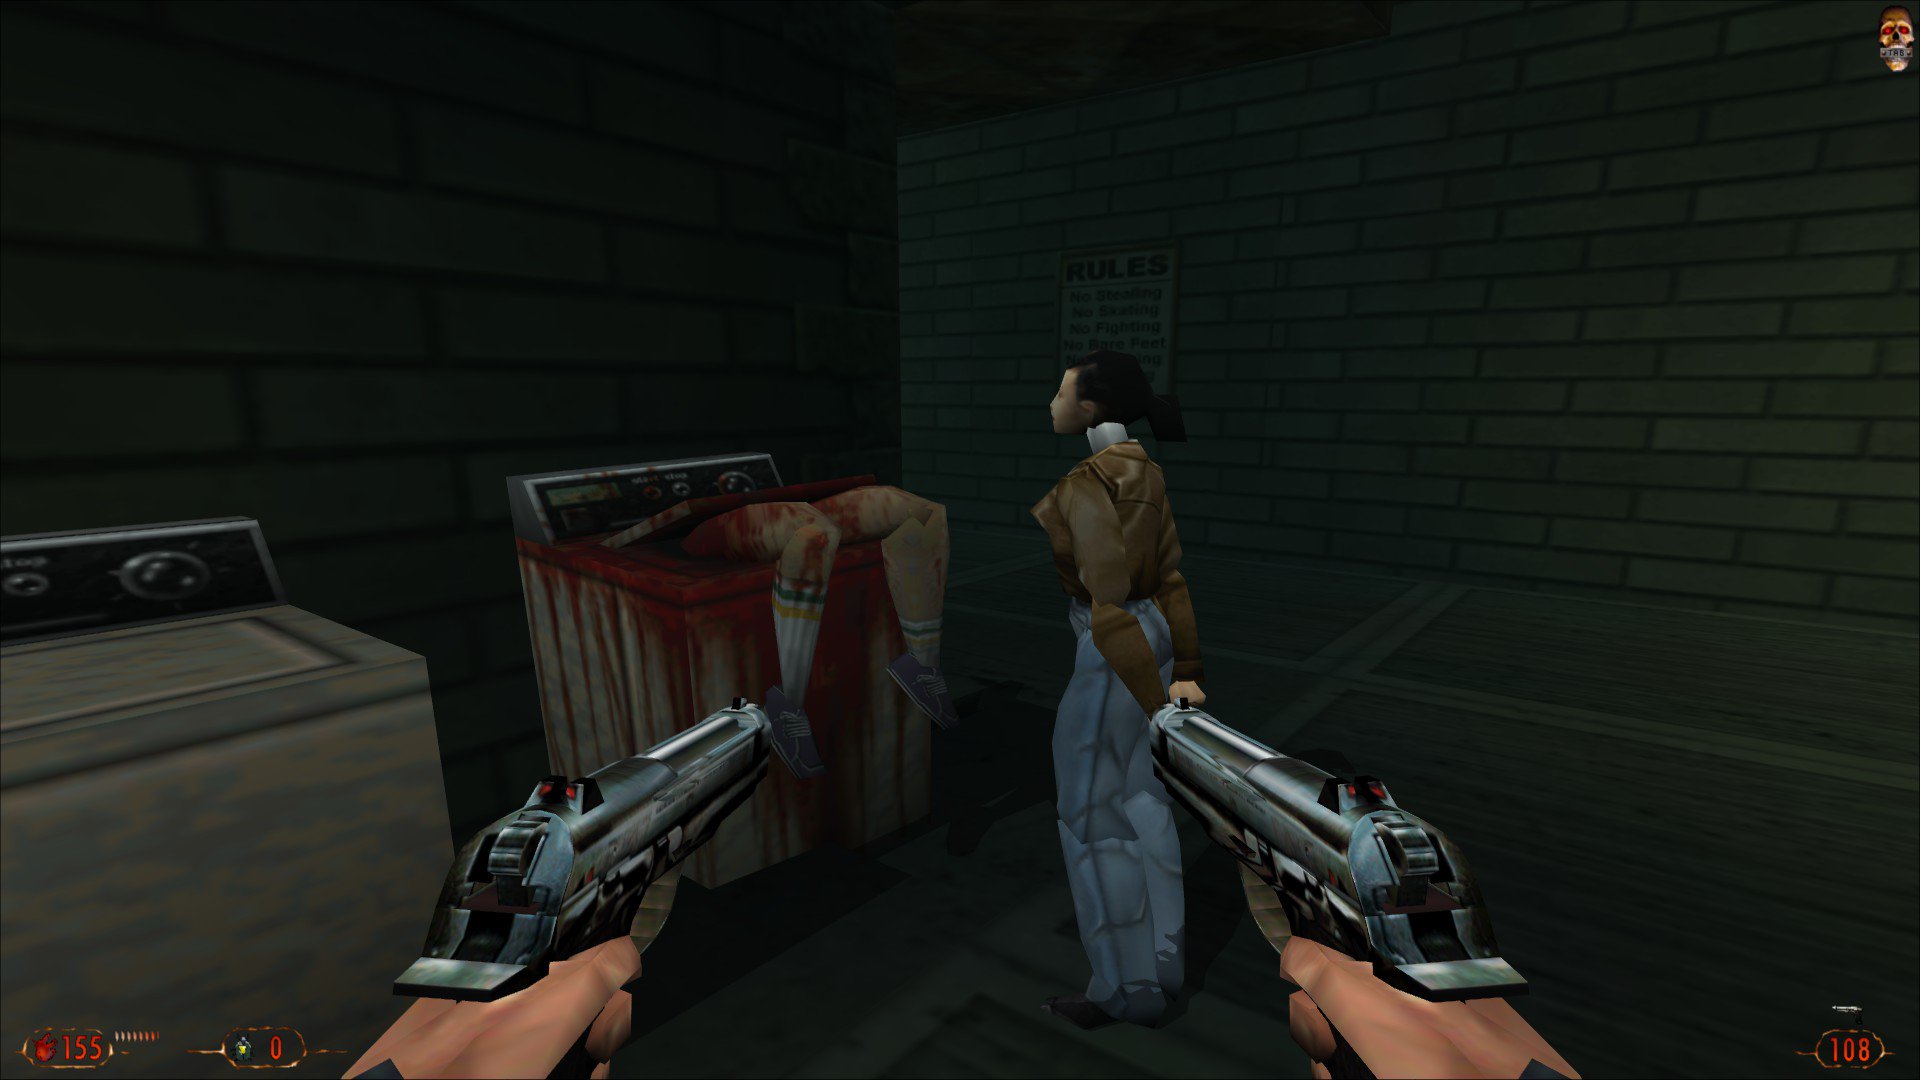 Blood 2: The Chosen Windows game - ModDB